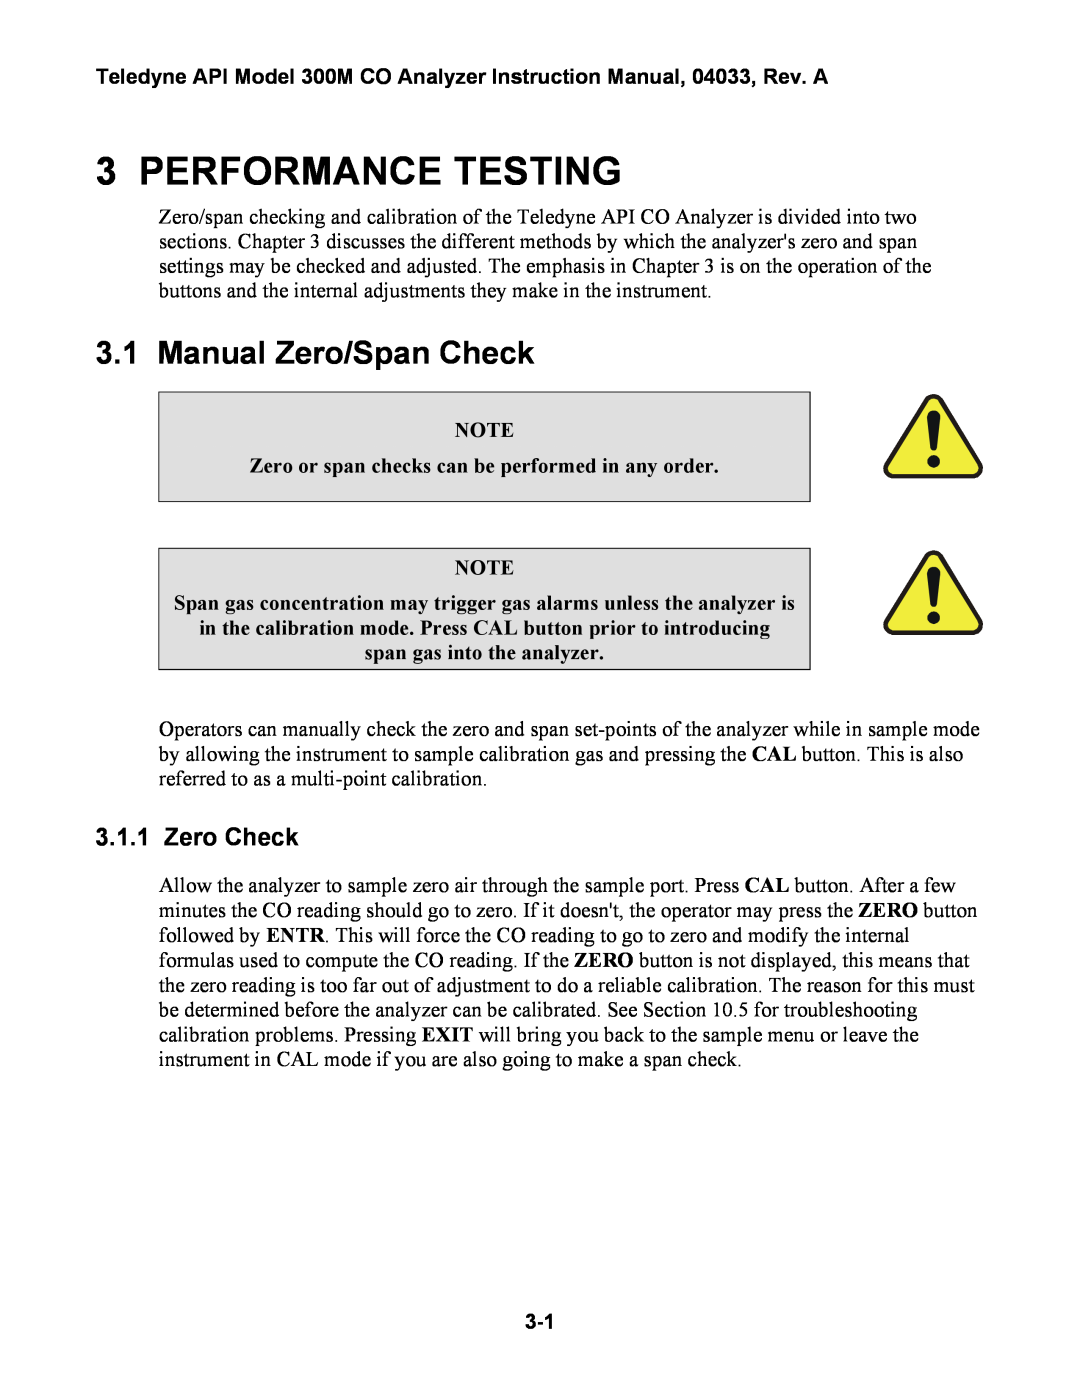 Teledyne 300M instruction manual Performance Testing, Manual Zero/Span Check, Zero Check, span gas into the analyzer 